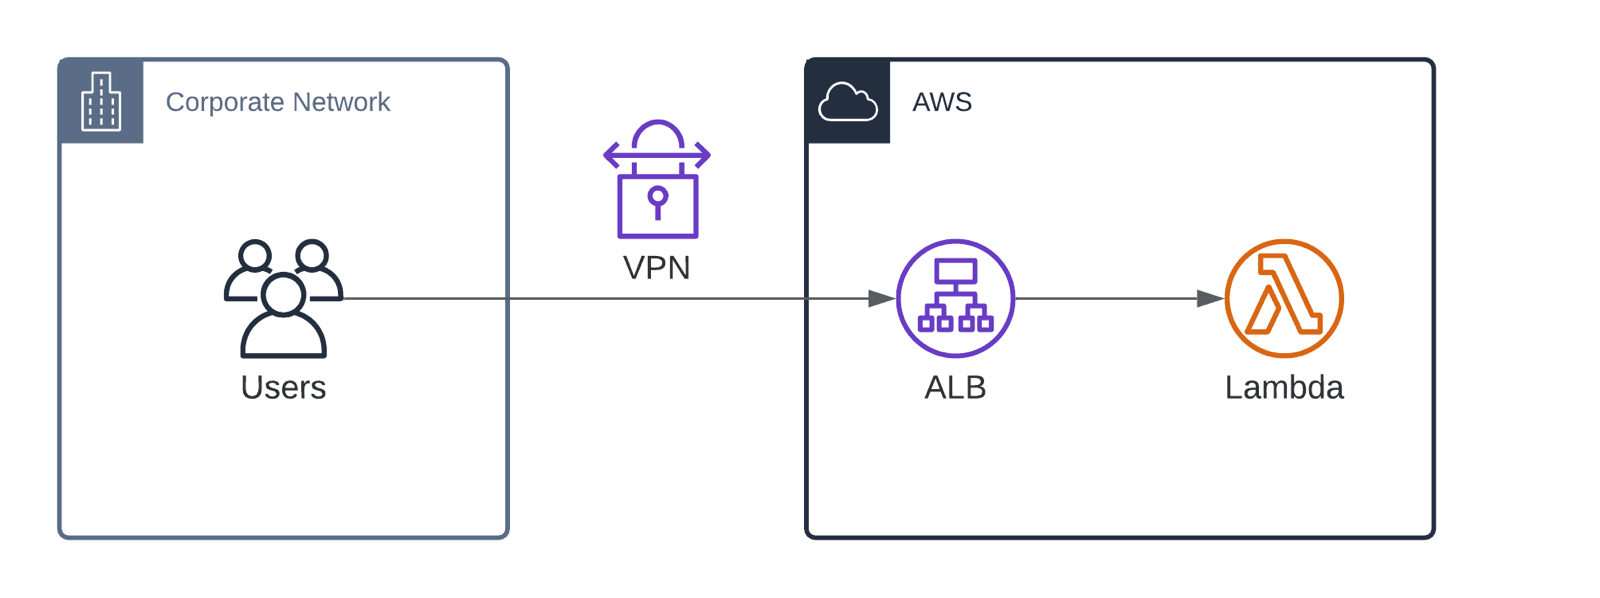 Serverless Hybdrid Cloud: VPN, ALB, and Lambda